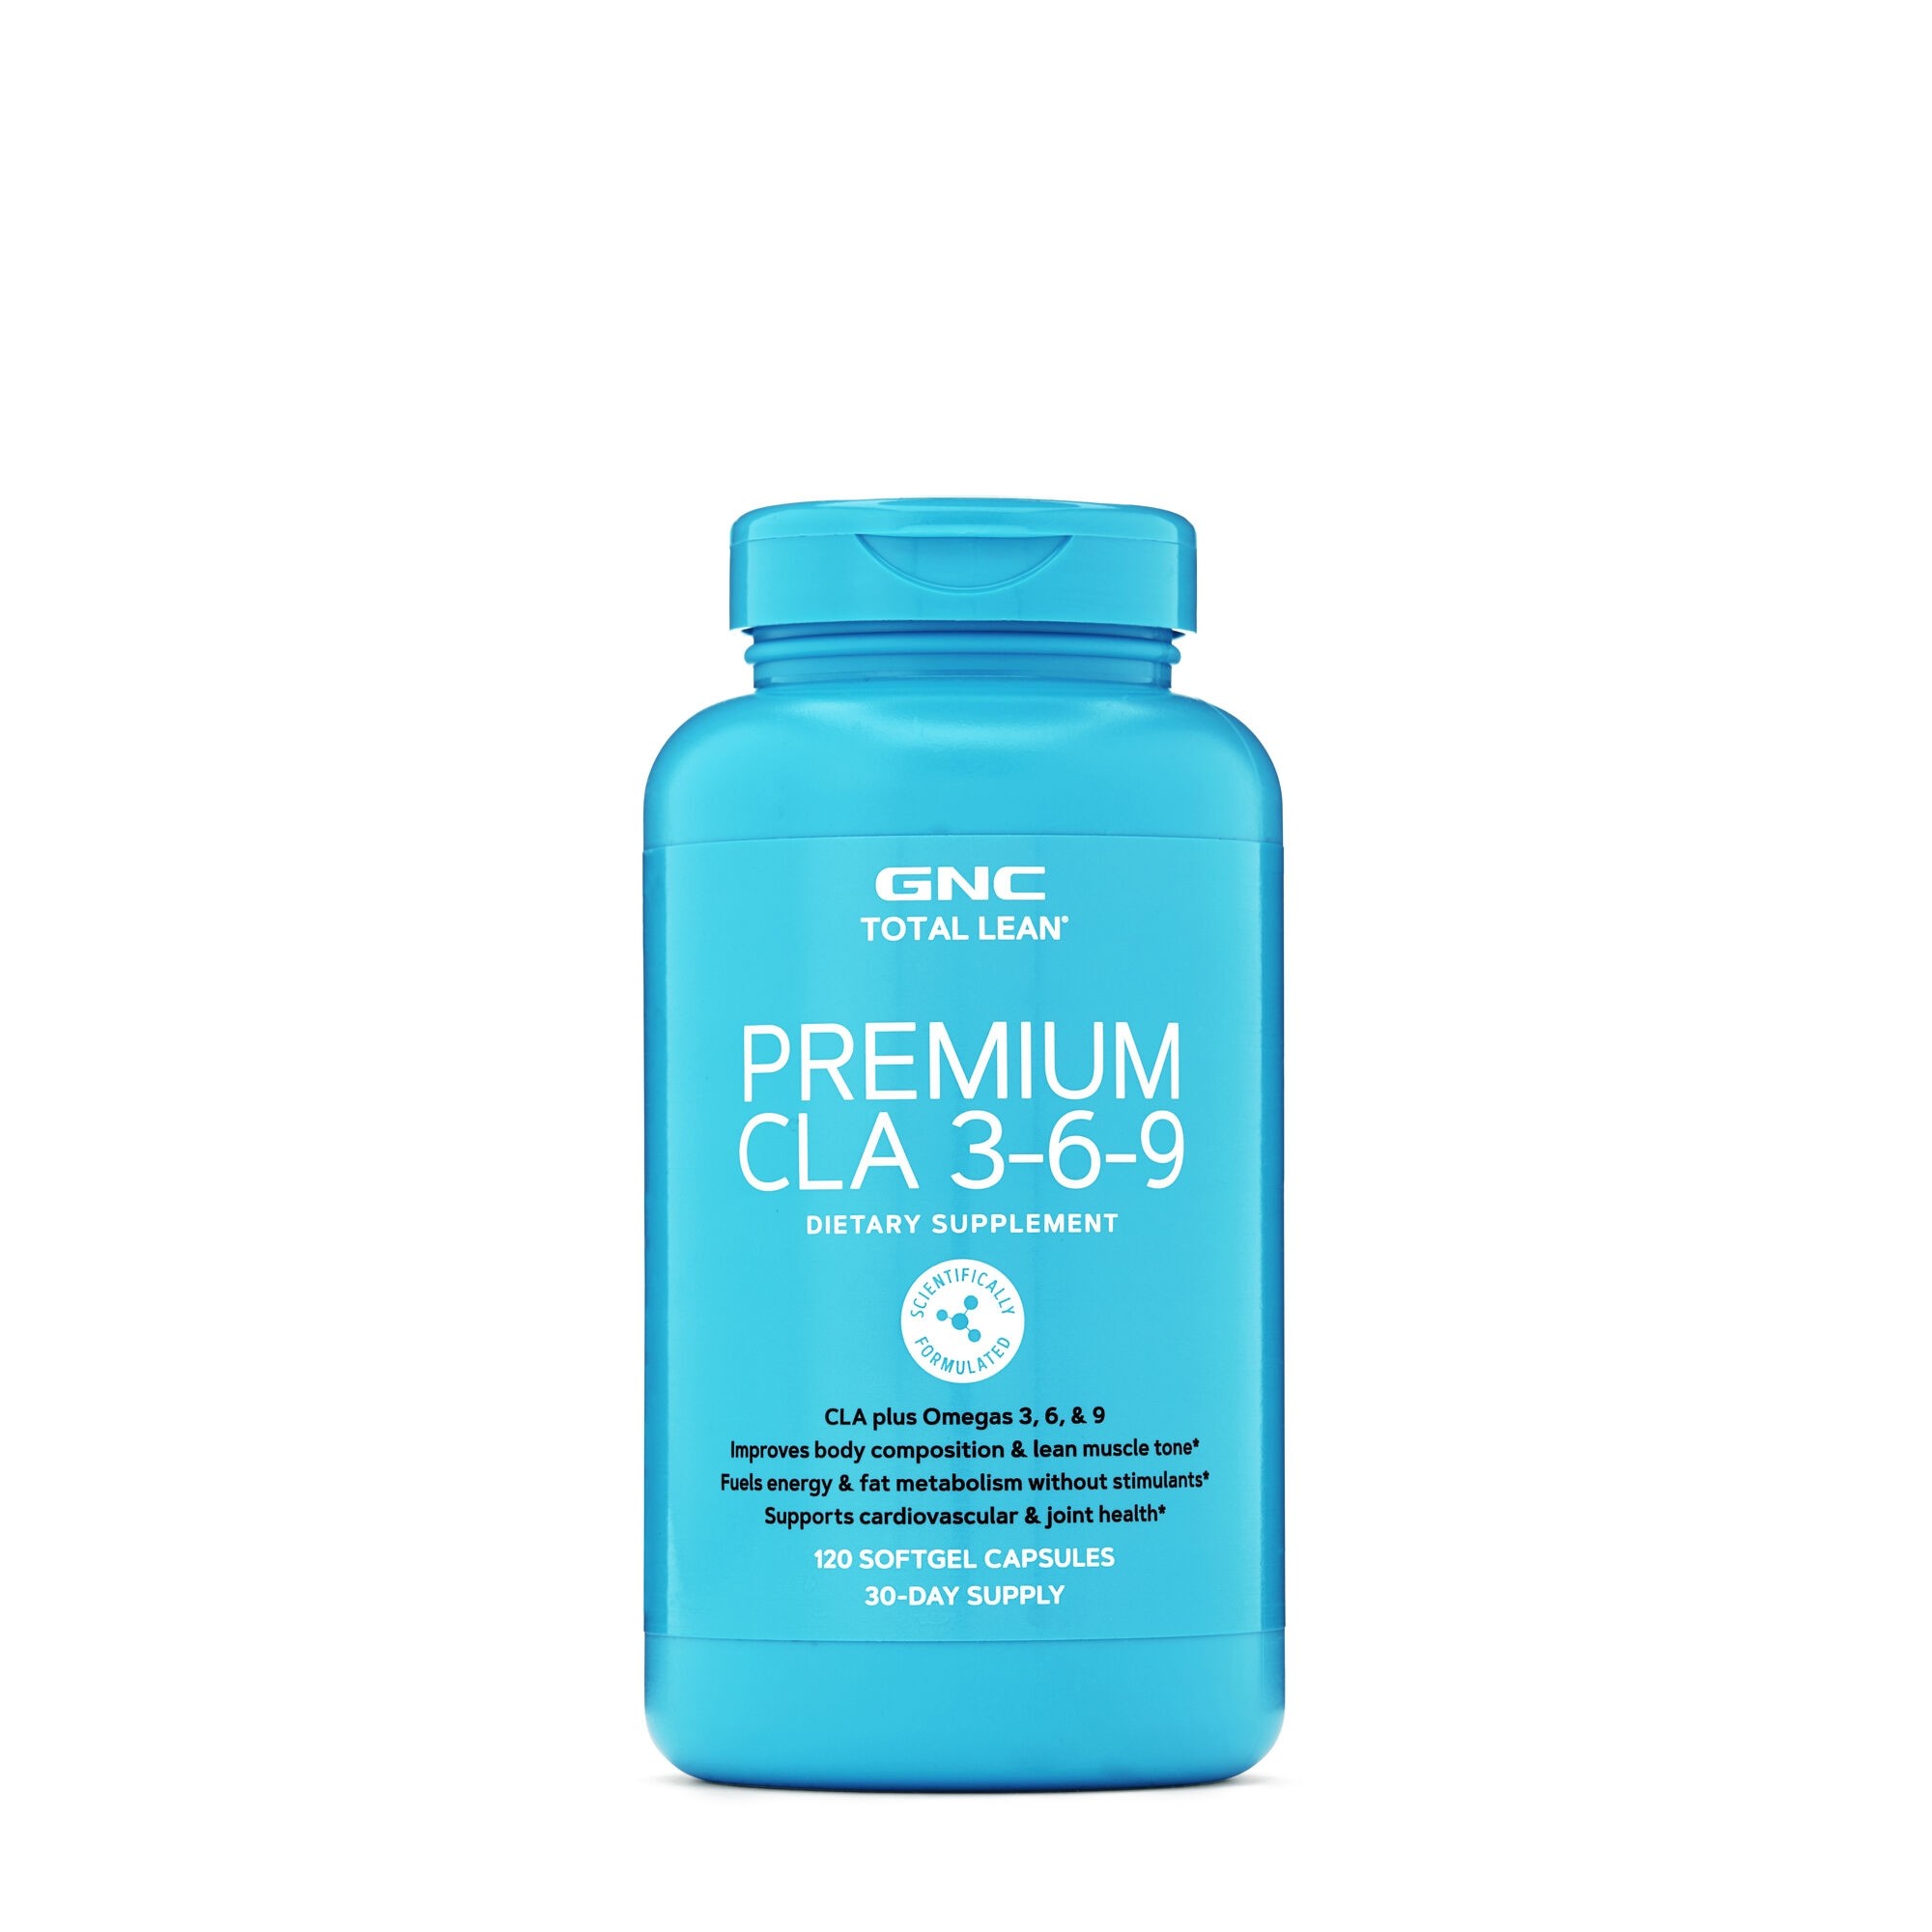 Slăbire și lipoliză -  Total Lean Premium CLA 3-6-9, Acid Linoleic Conjugat si Omega 3-6-9, 120 capsule, GNC, farmaciamare.ro